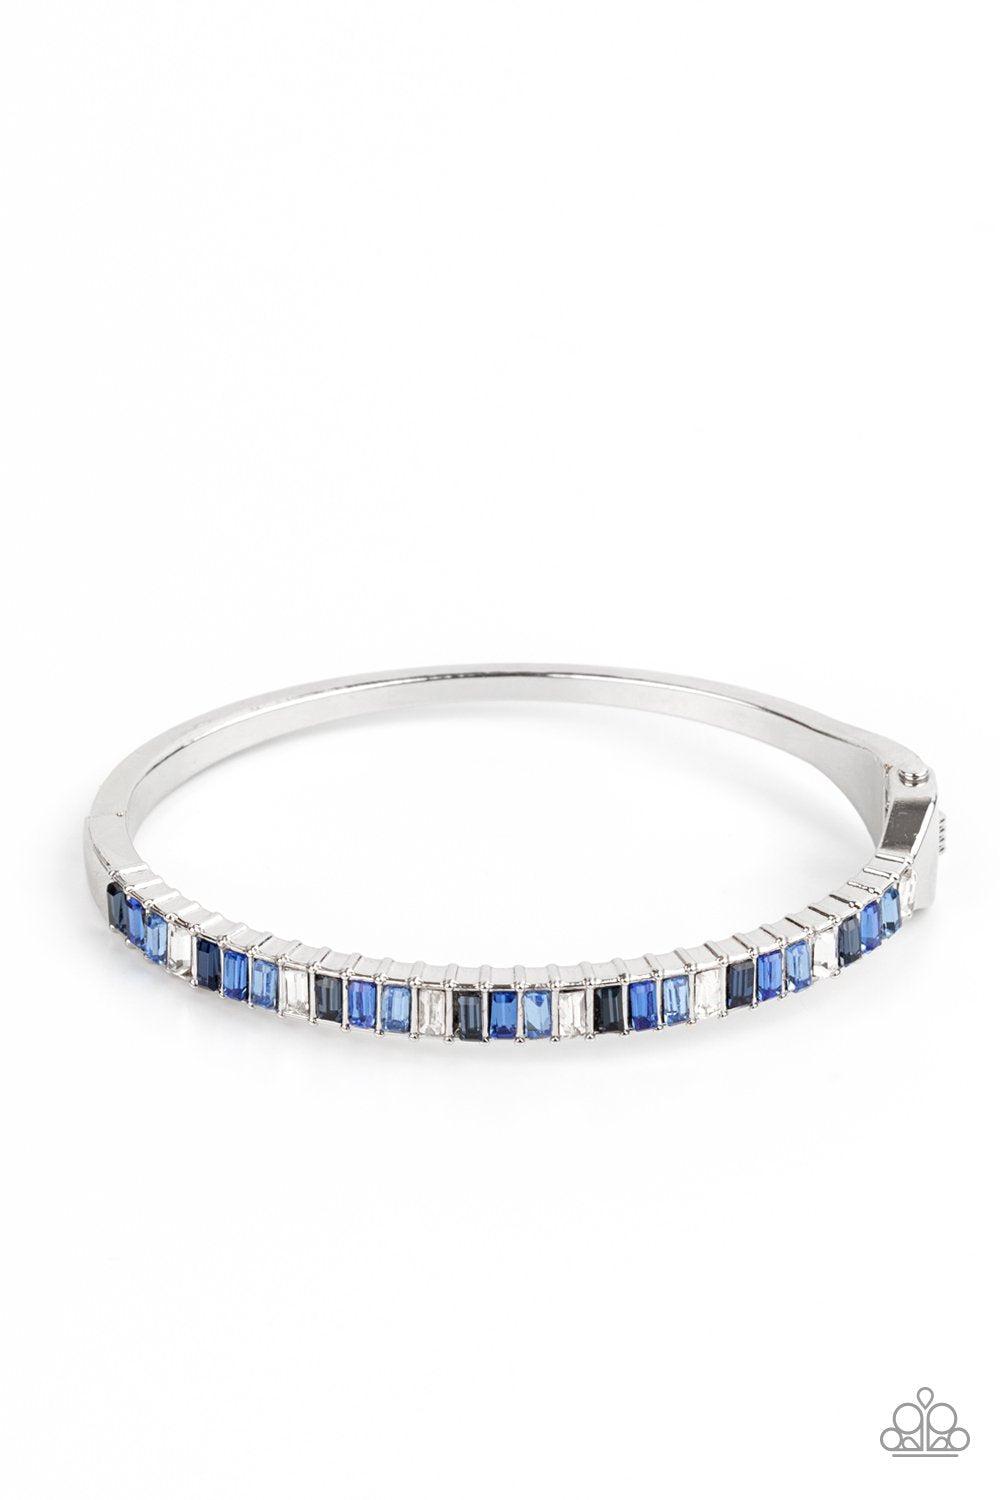 Toast to Twinkle Blue Rhinestone Hinged Bracelet - Paparazzi Accessories- lightbox - CarasShop.com - $5 Jewelry by Cara Jewels